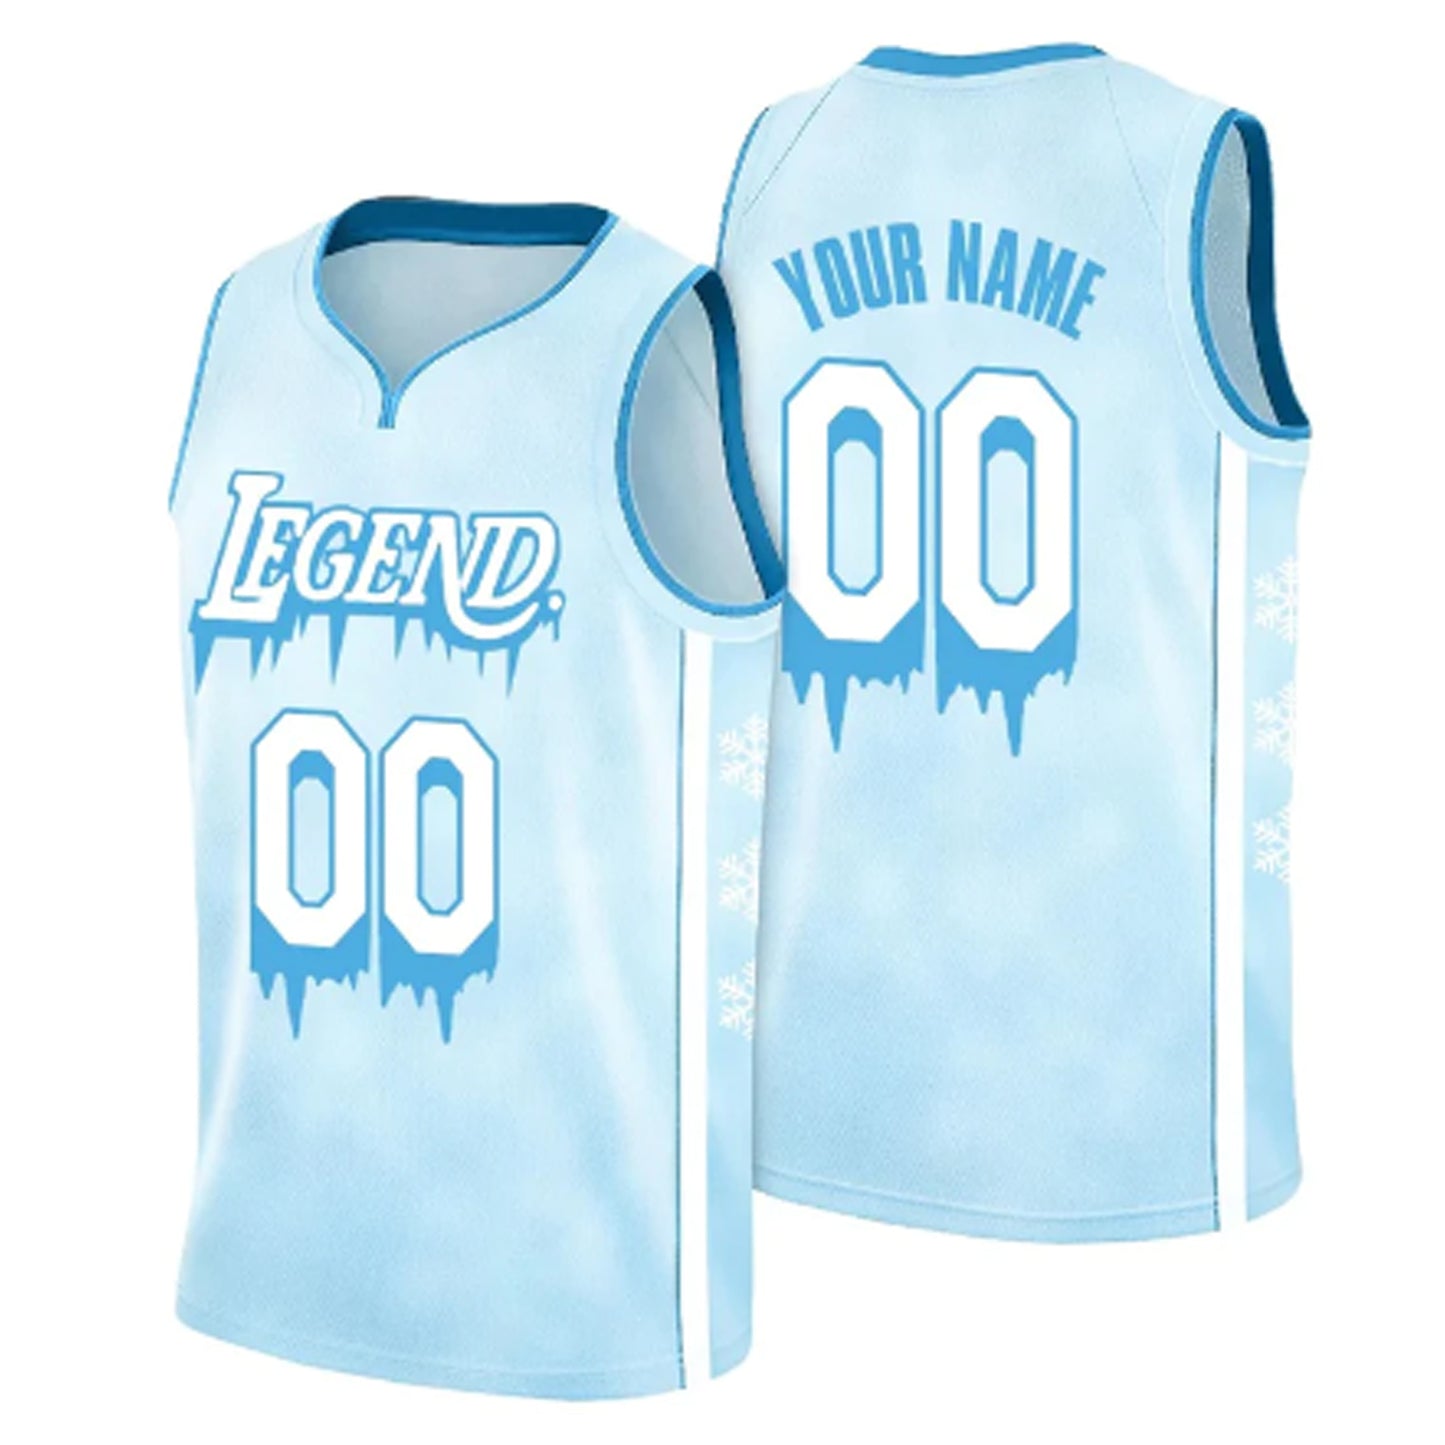 Legend Icy Custom Basketball 00 Jersey